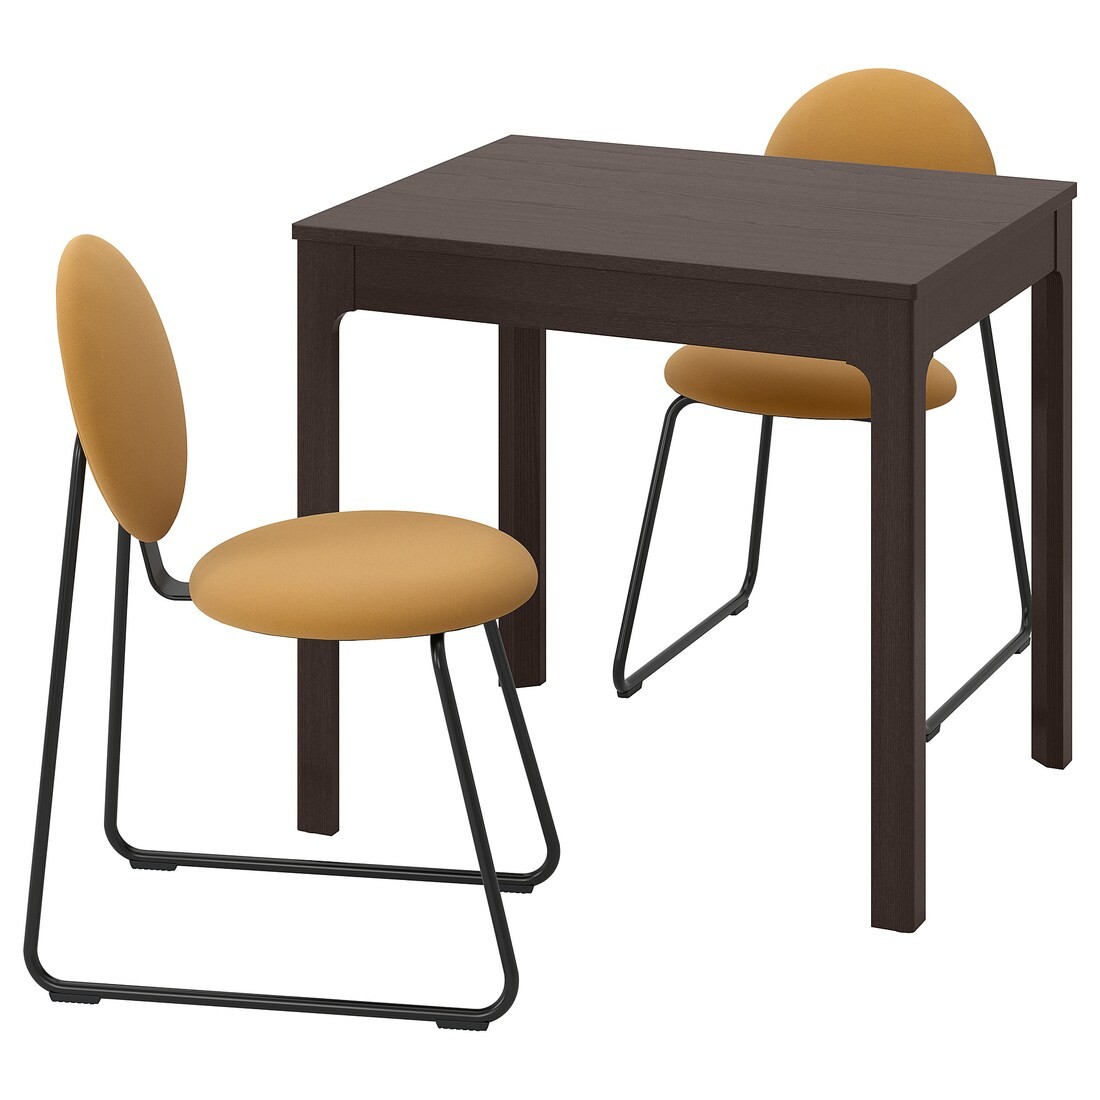 EKEDALEN / MÅNHULT Стол и 2 стула, темно-коричневый / Hakebo медово-коричневый, 80/120 см